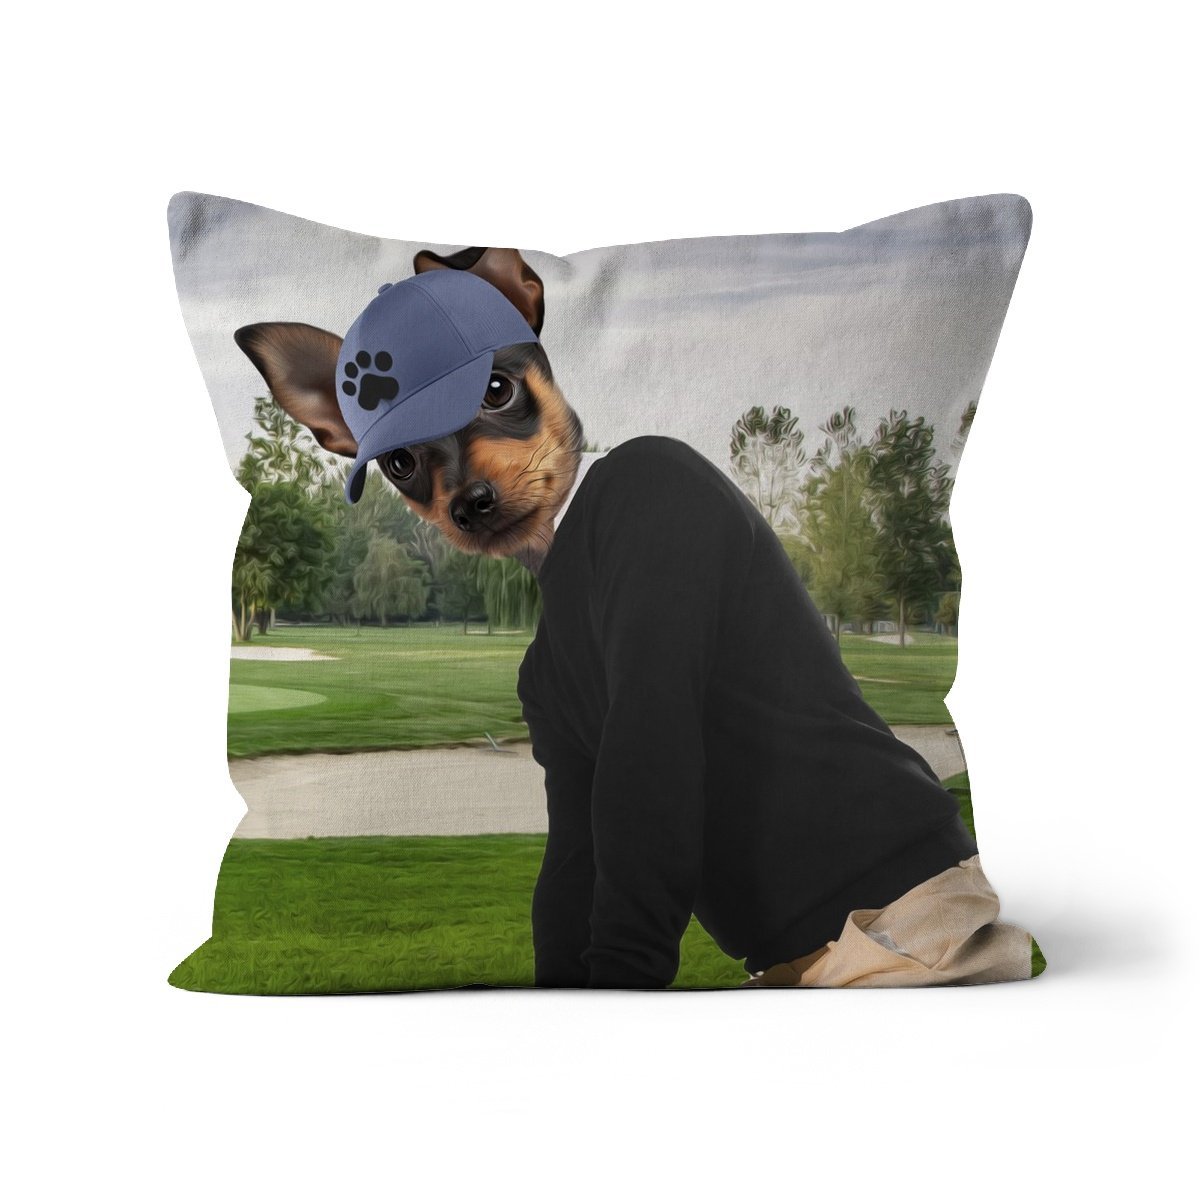 The Golfer: Custom Pet Cushion - Paw & Glory - #pet portraits# - #dog portraits# - #pet portraits uk#paw & glory, custom pet portrait pillow,pup pillows, pillows of your dog, pillow personalized, print pet on pillow, pet face pillow